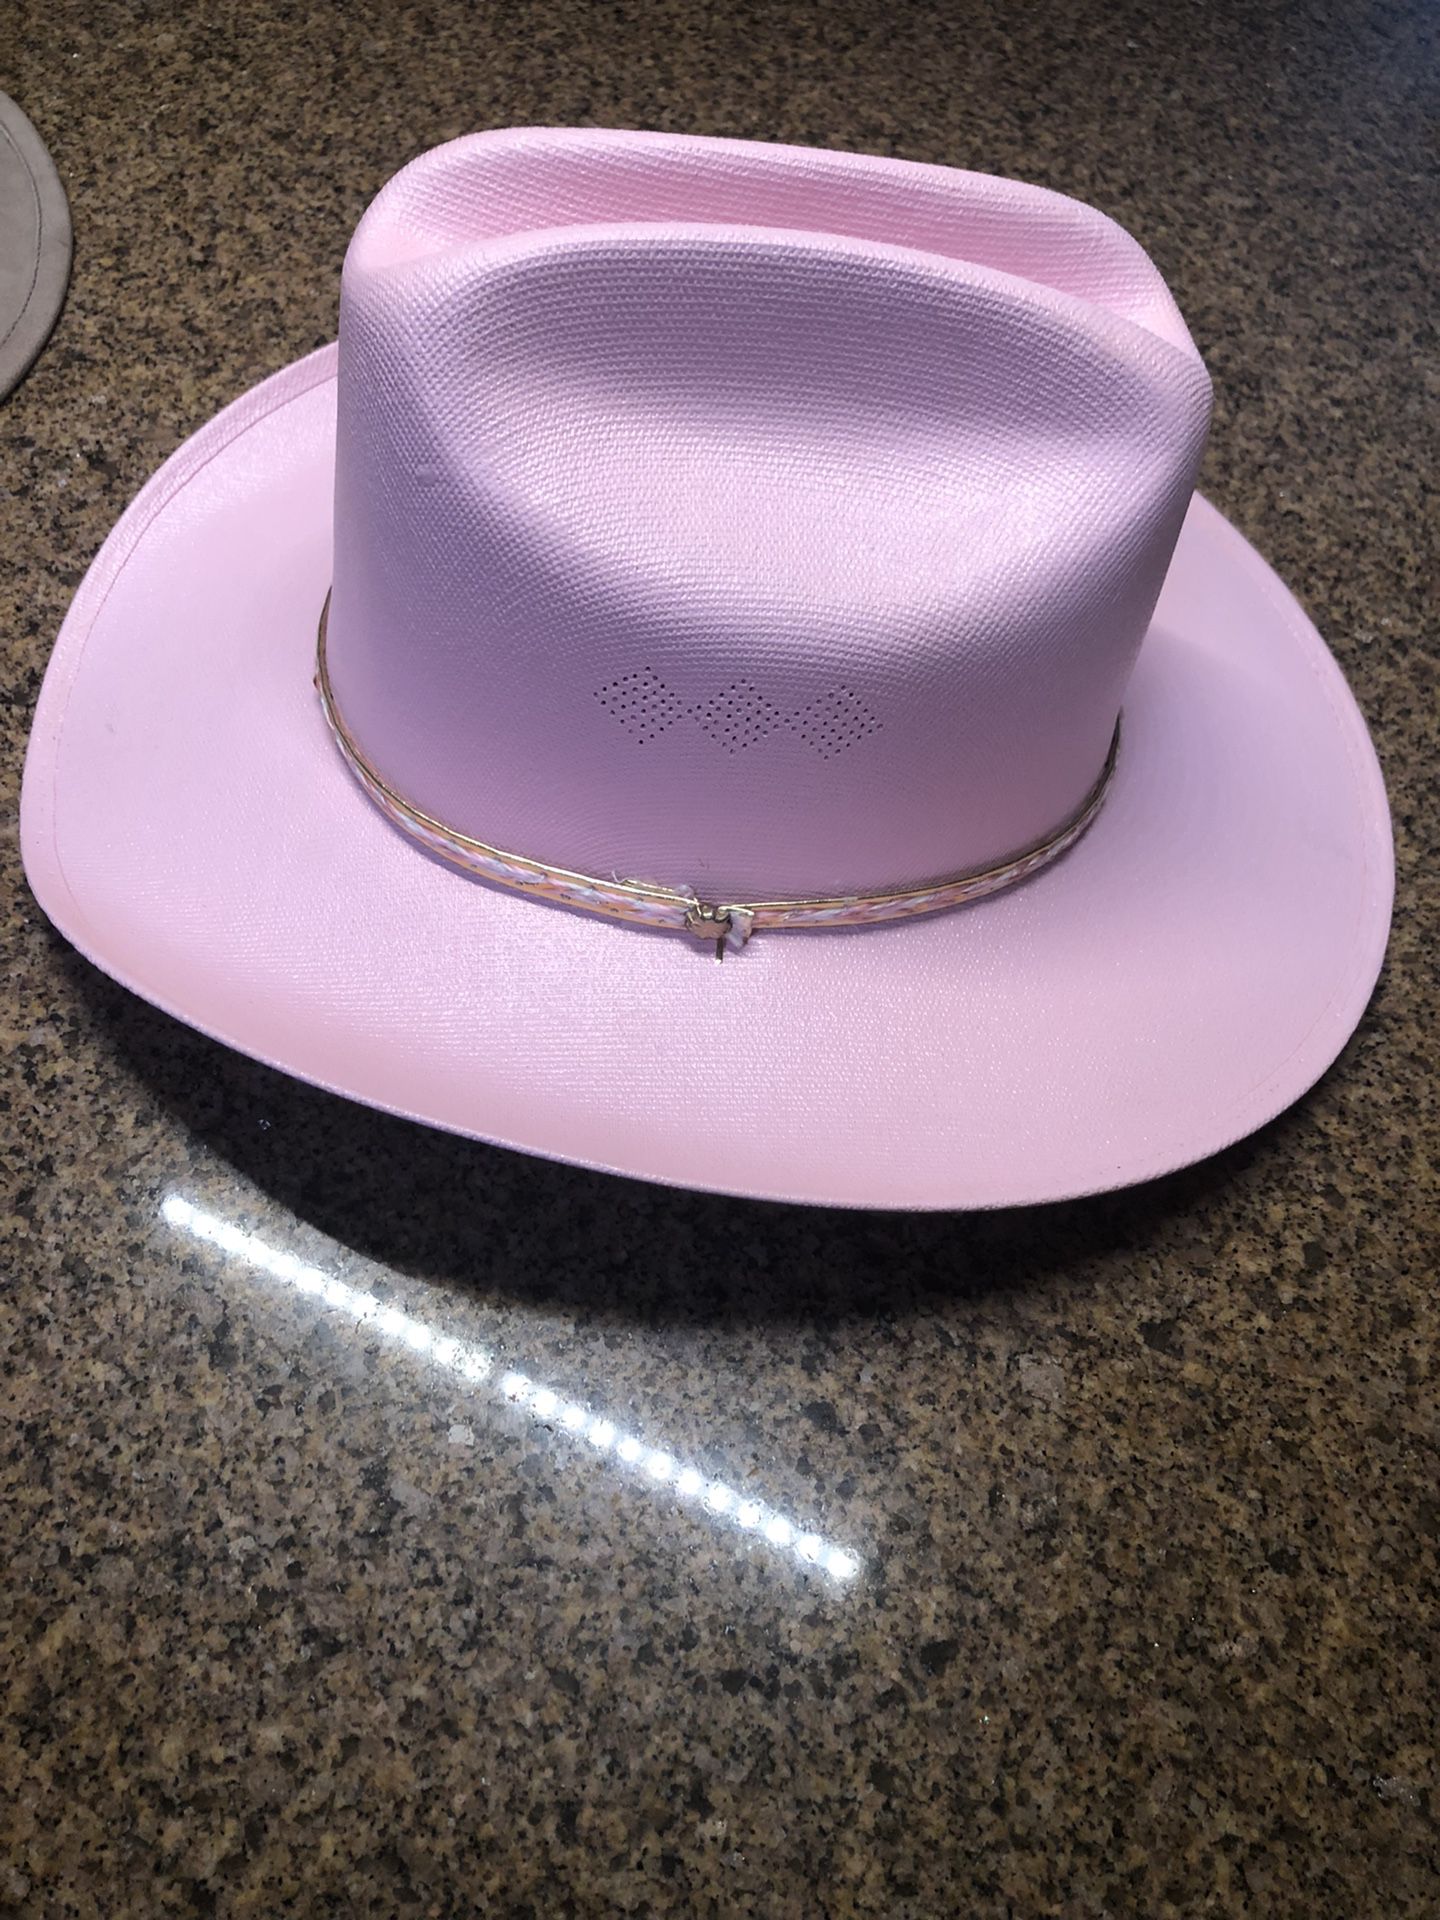 Little Girls Hat Pink